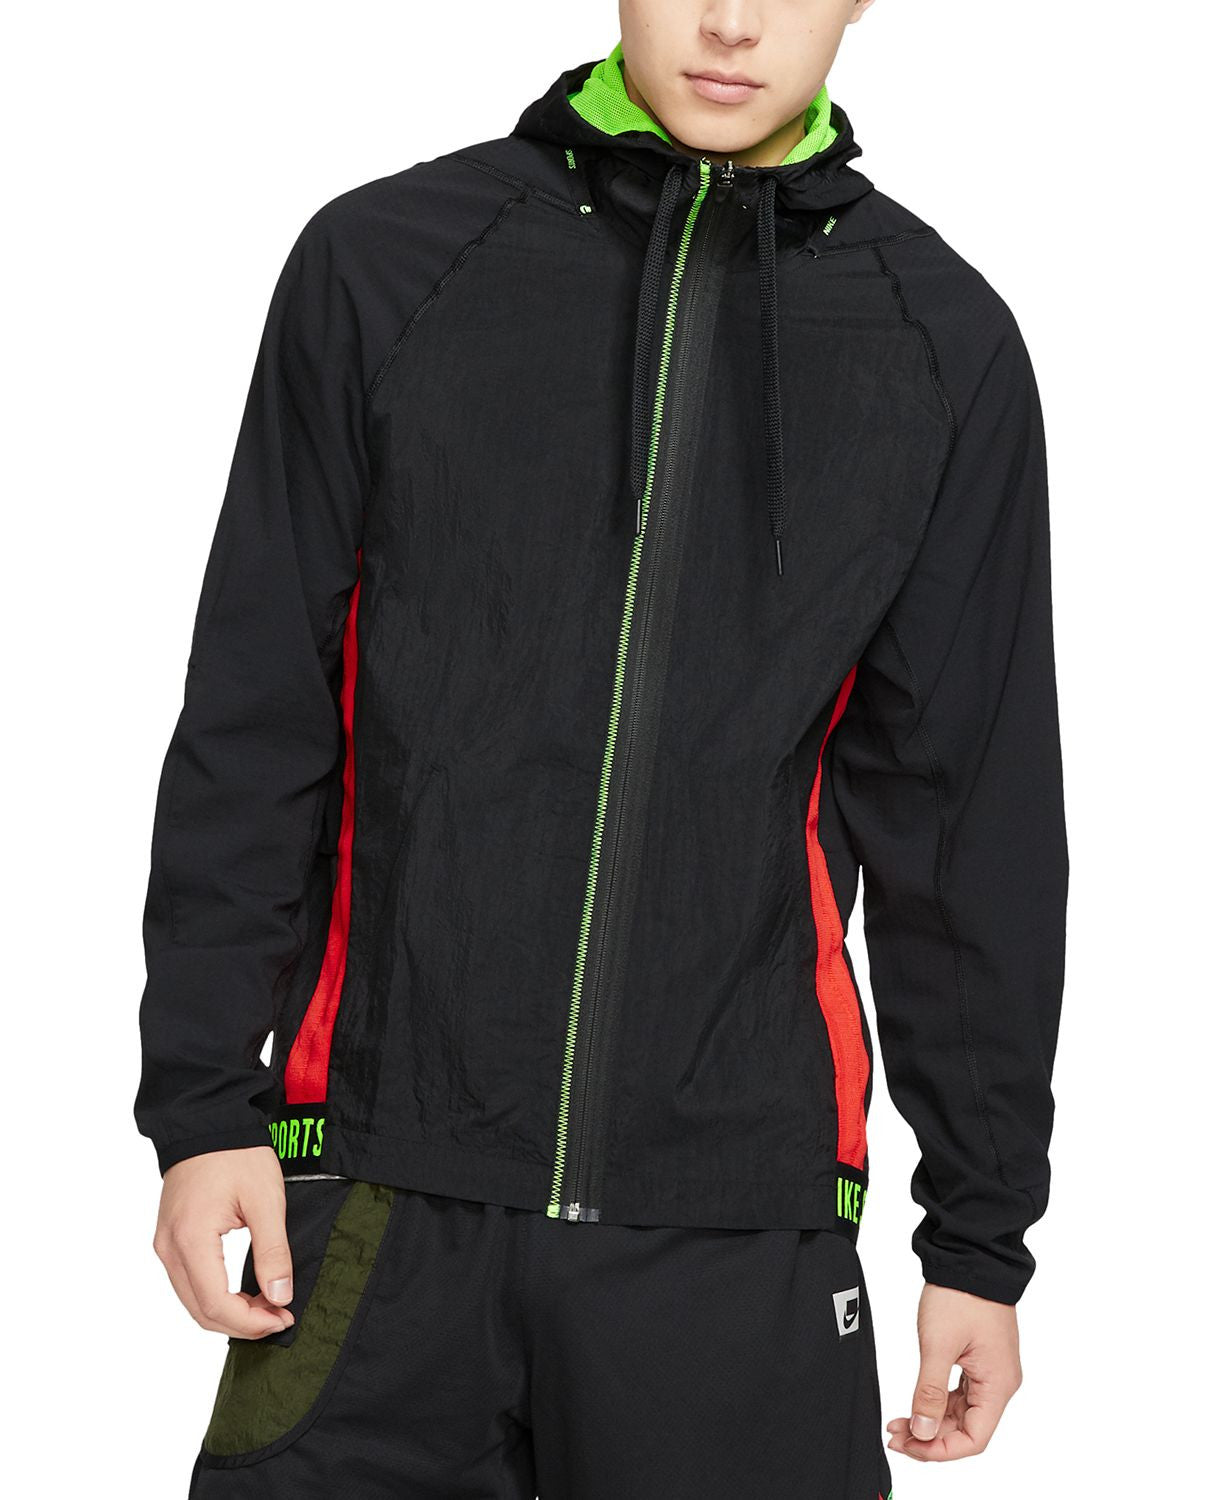 Nike Flex Jacket Black/Green